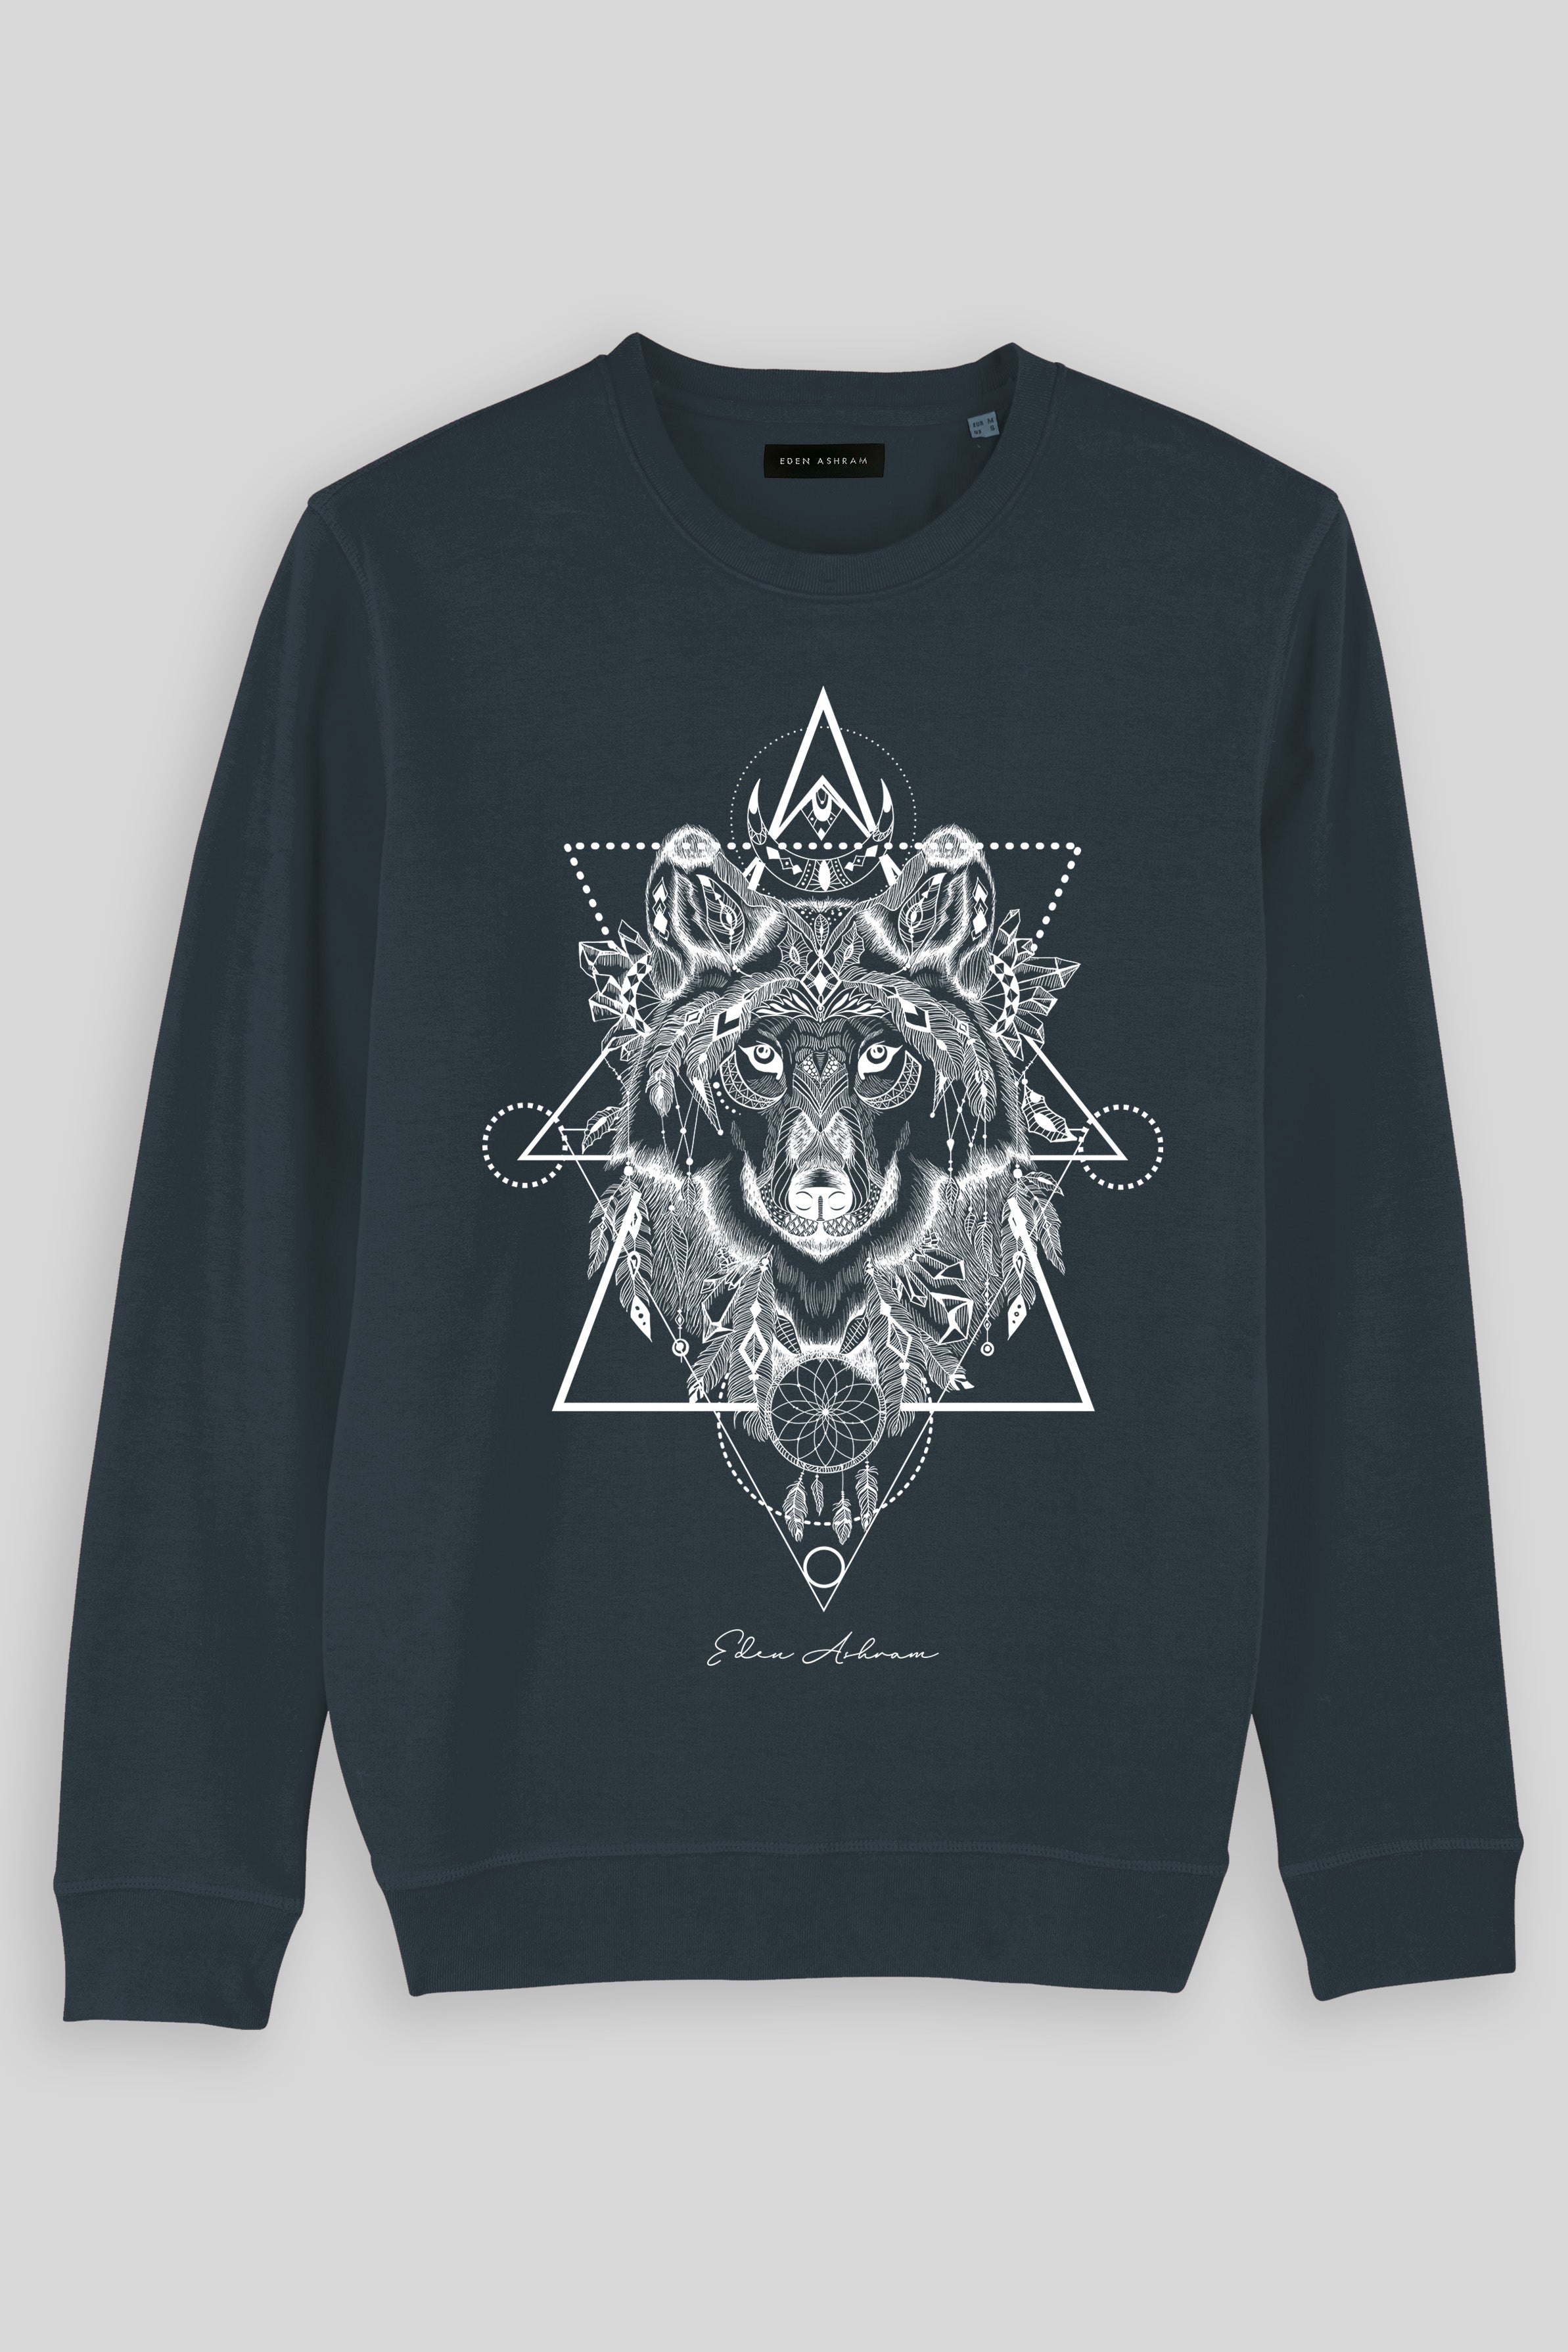 Eden Ashram Mystic Wolf Premium Crew Neck Sweatshirt India Ink Grey